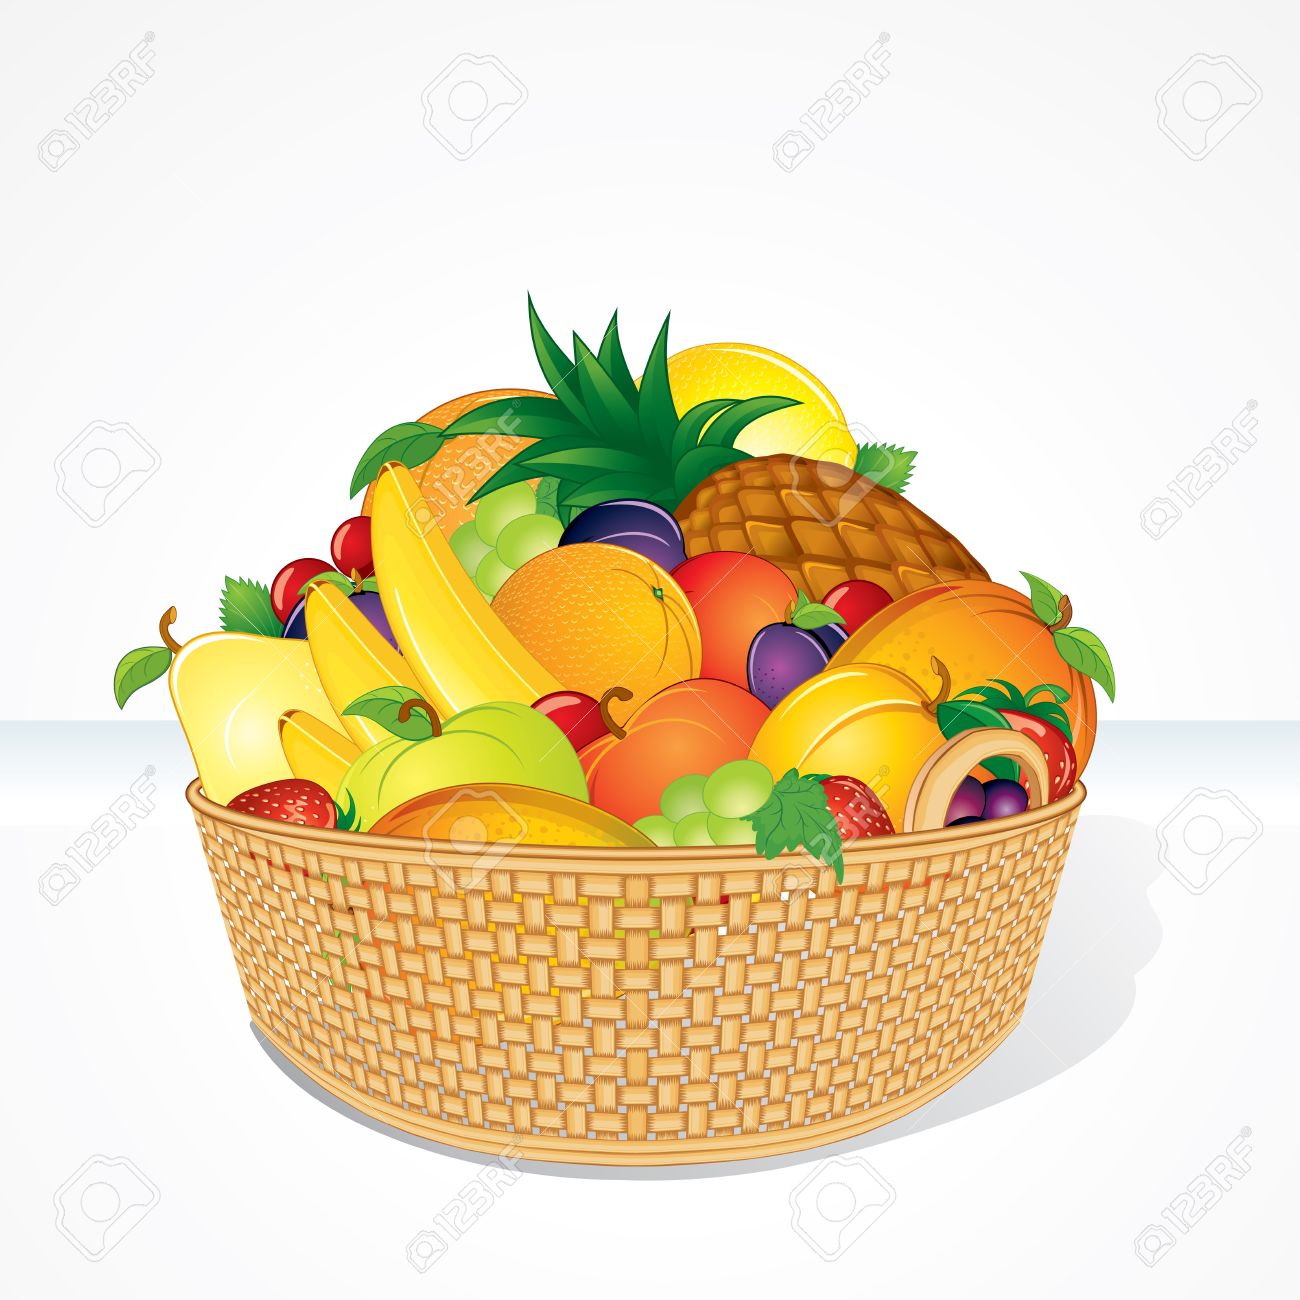 fruits basket cartoon images